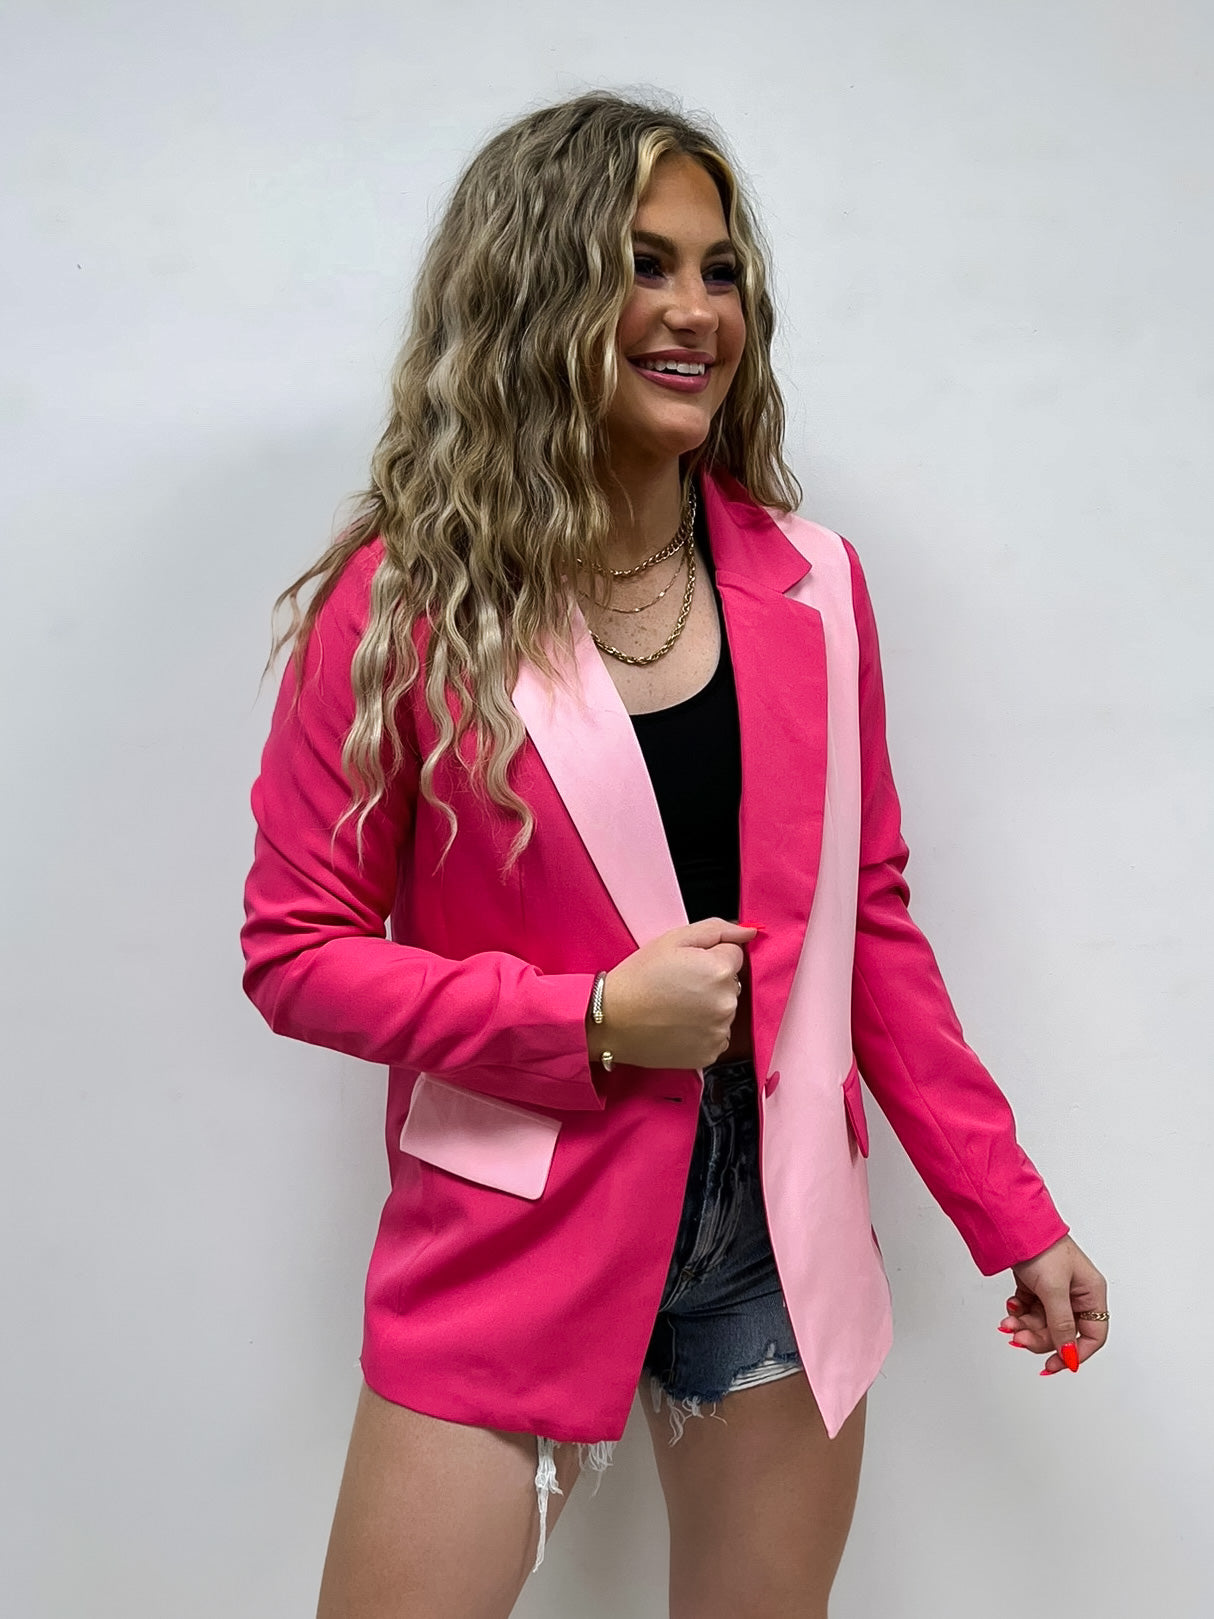 Pink Two Toned Blazer & Skort (sold separately)